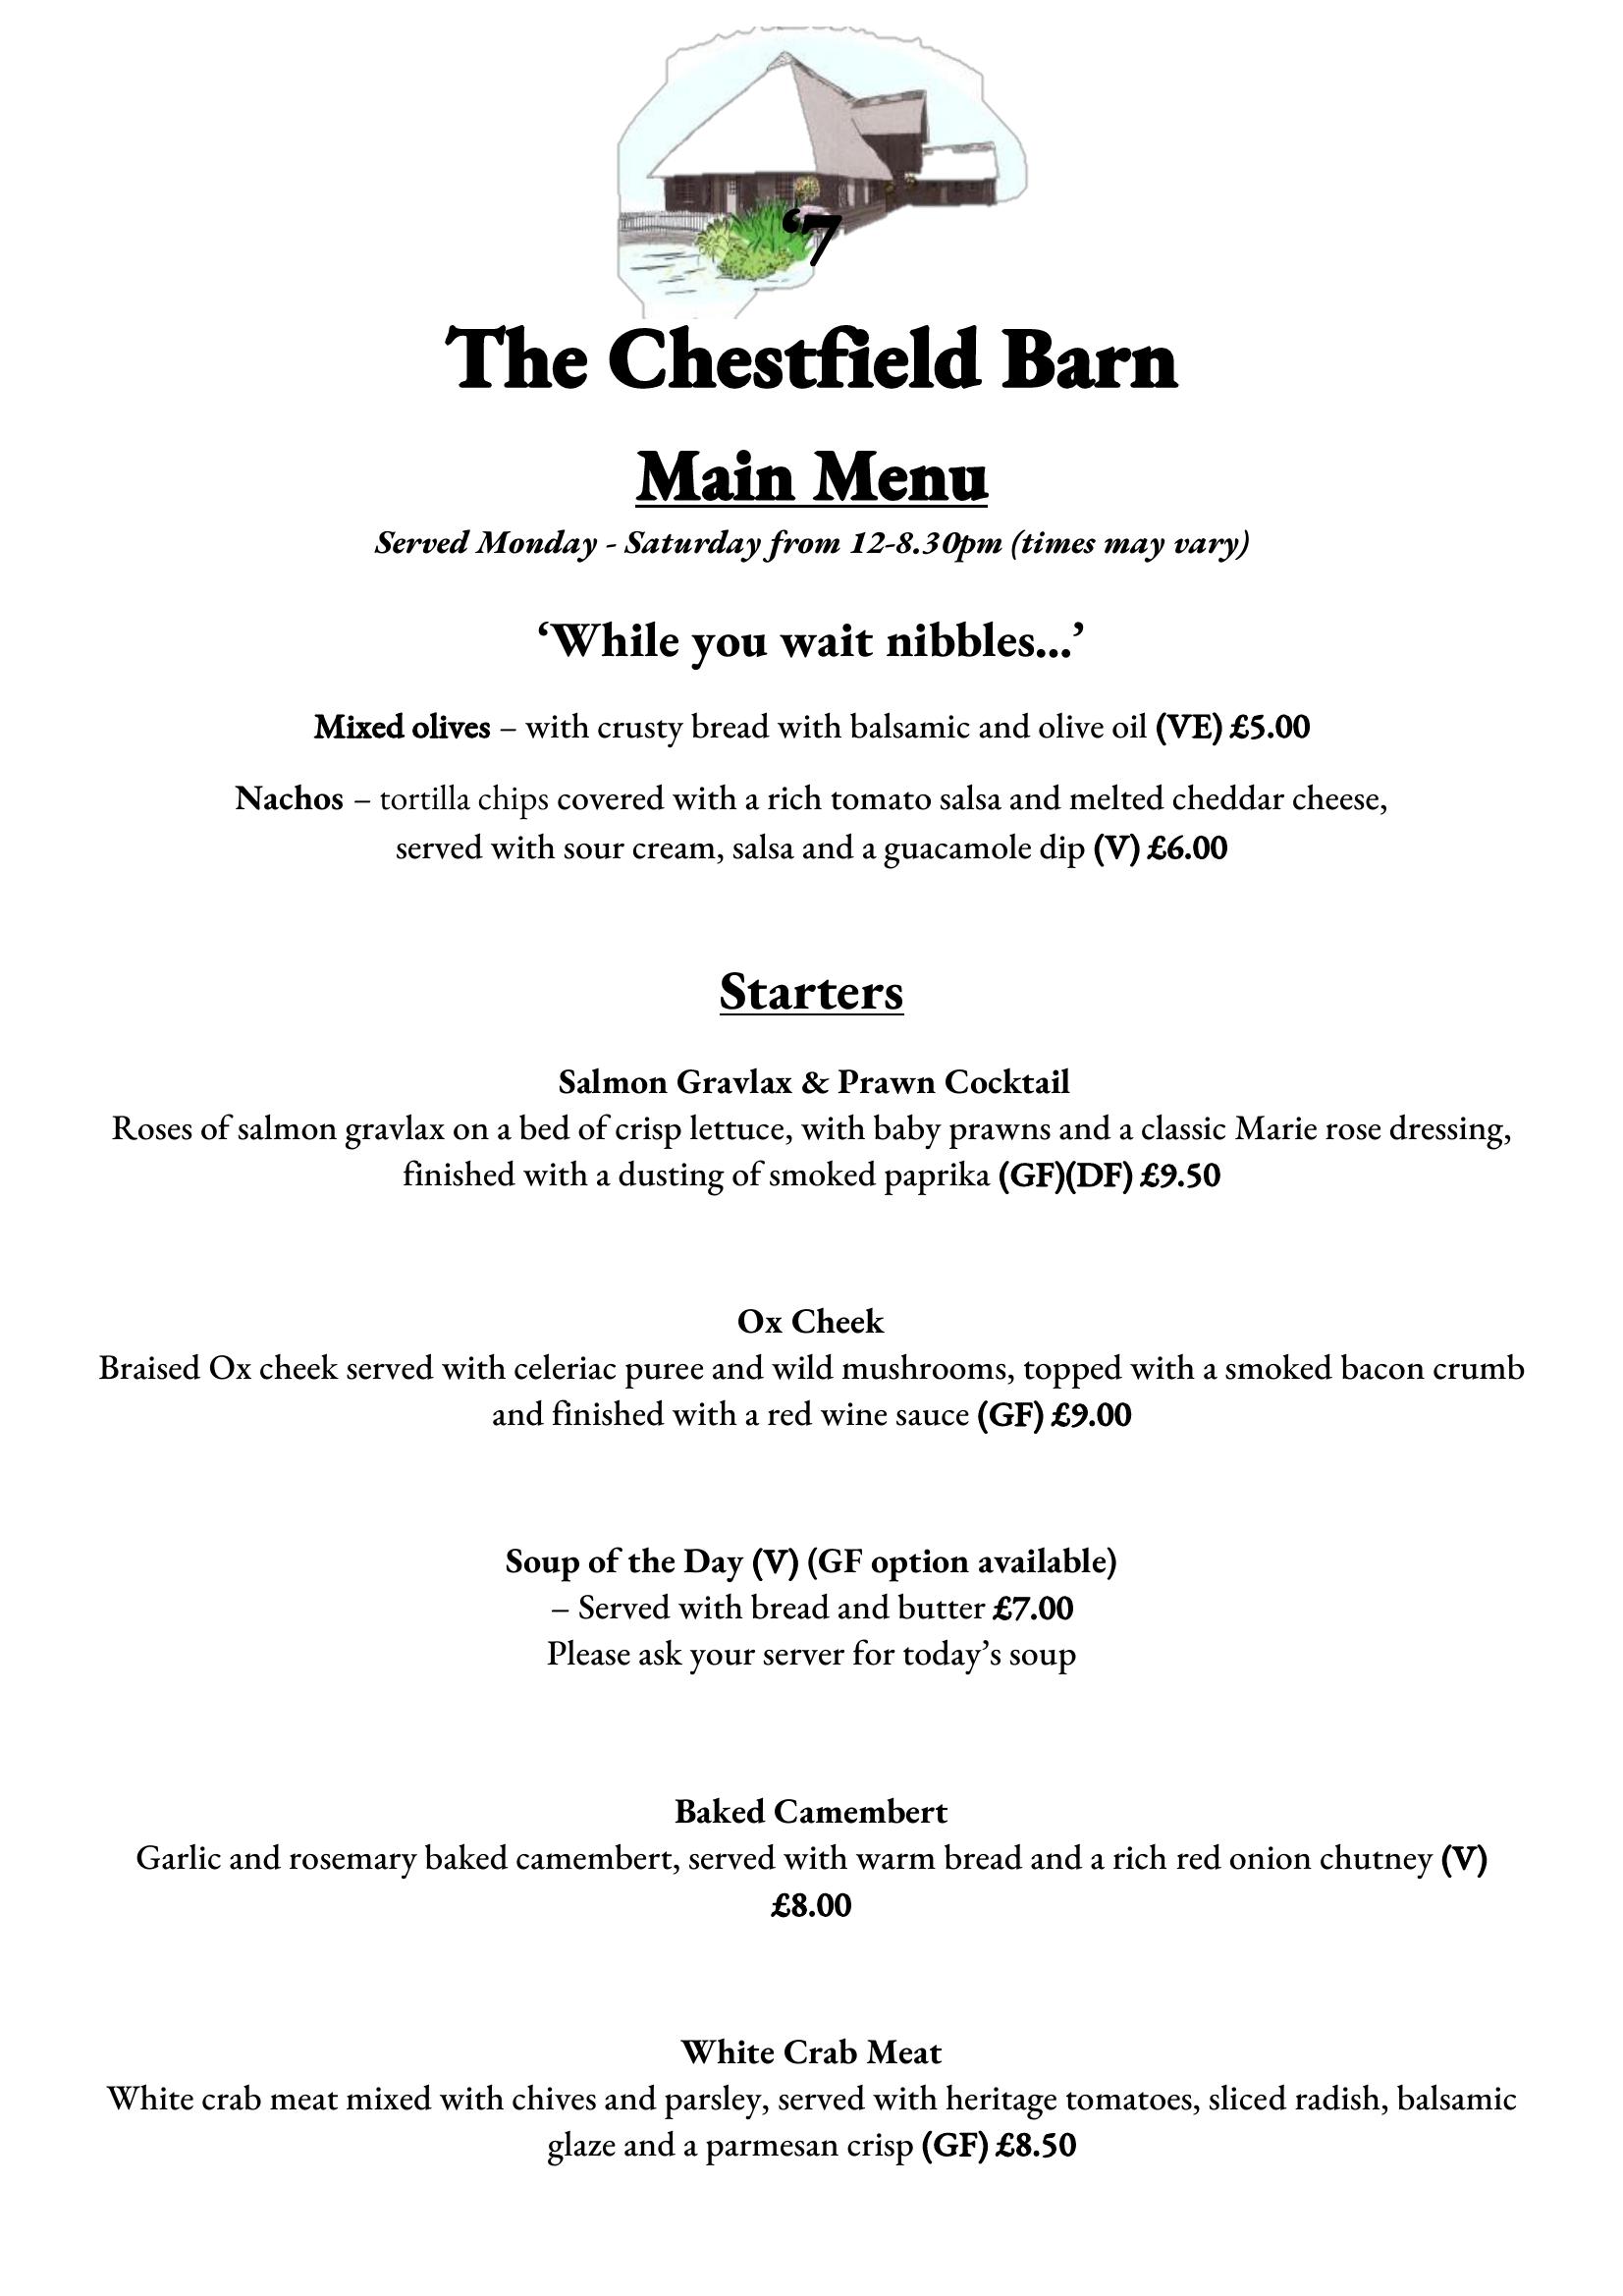 Chestfield Barn - main menu